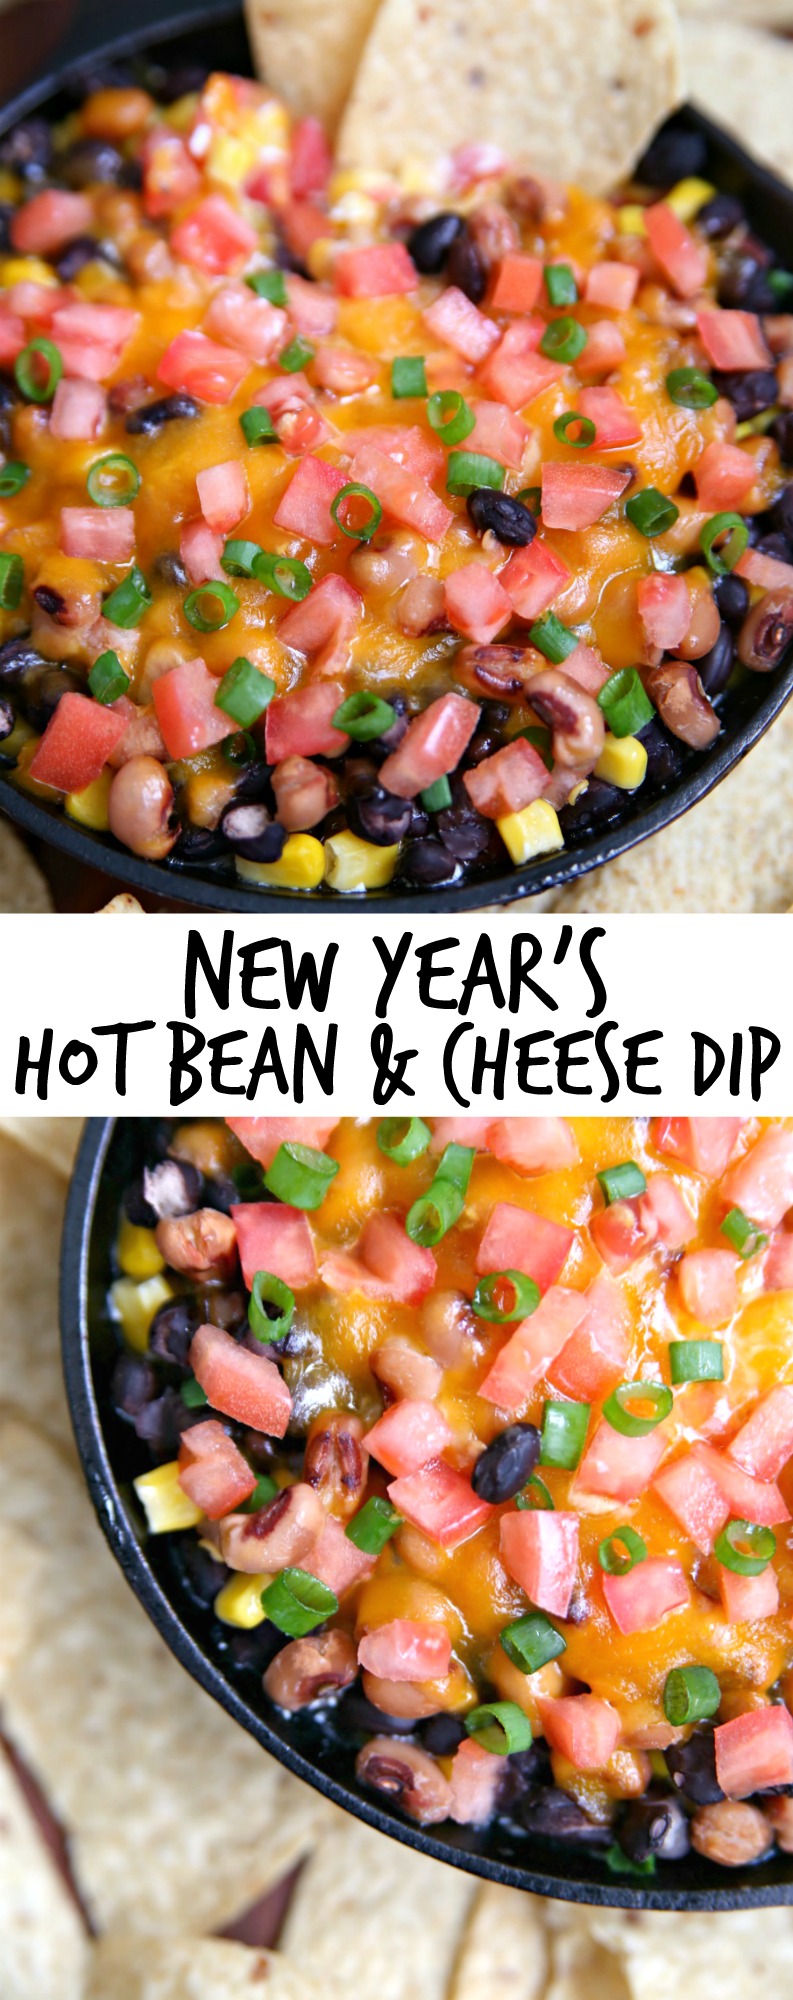 New Year's Hot Bean & Cheese Dip